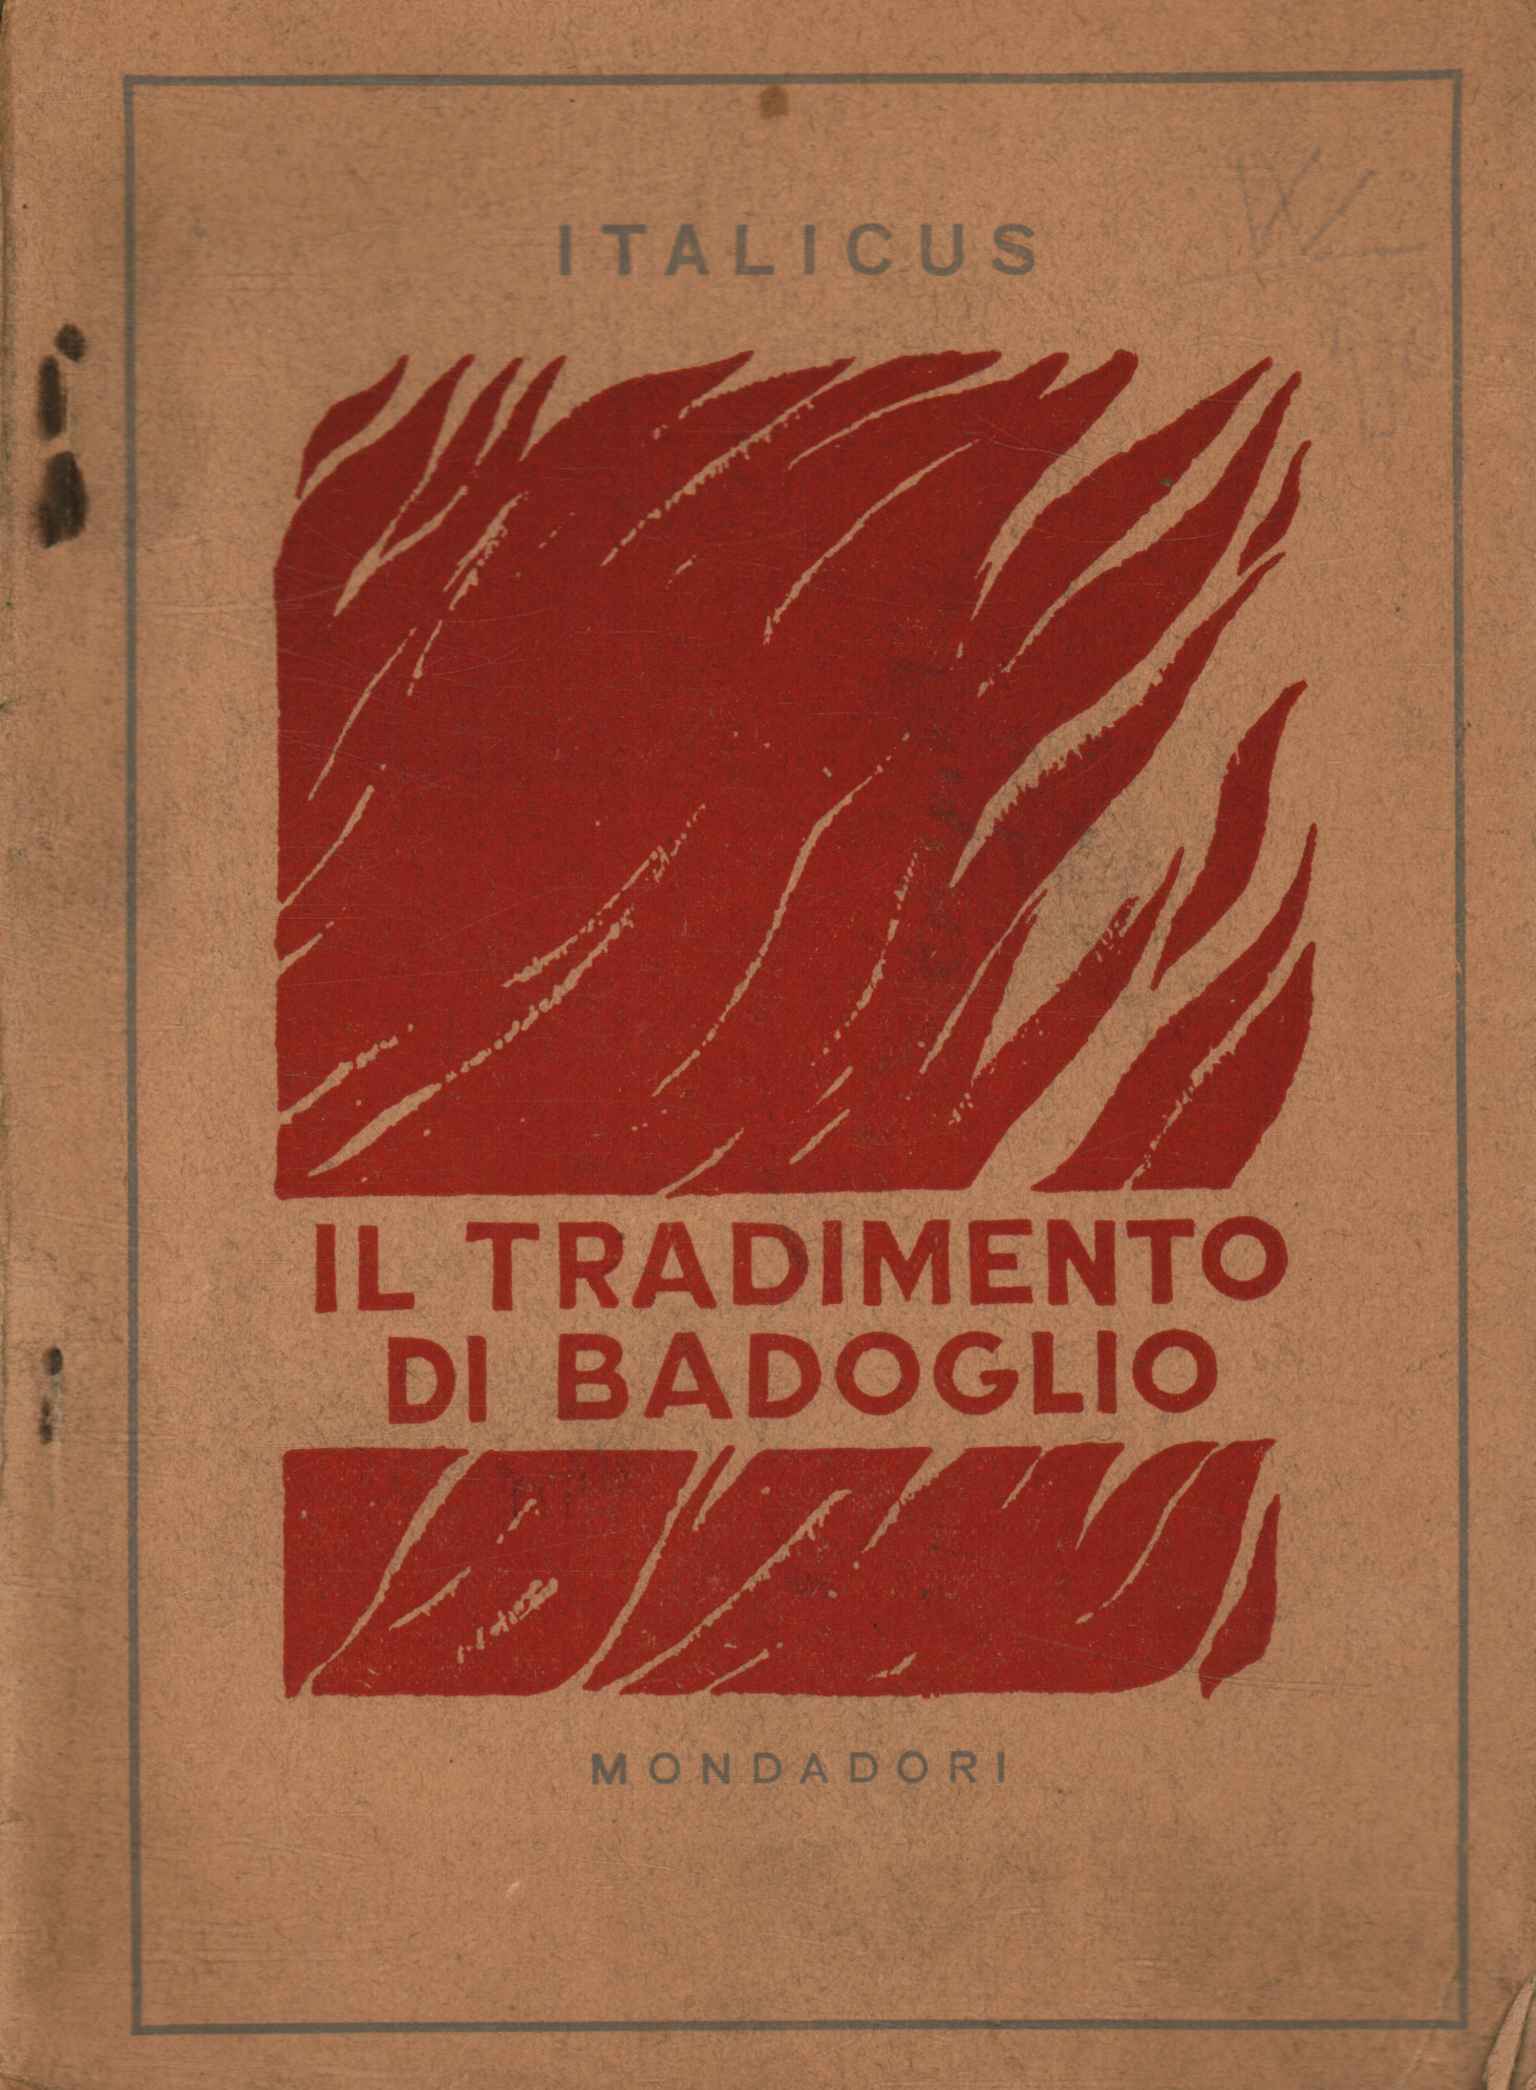 Badoglio's betrayal